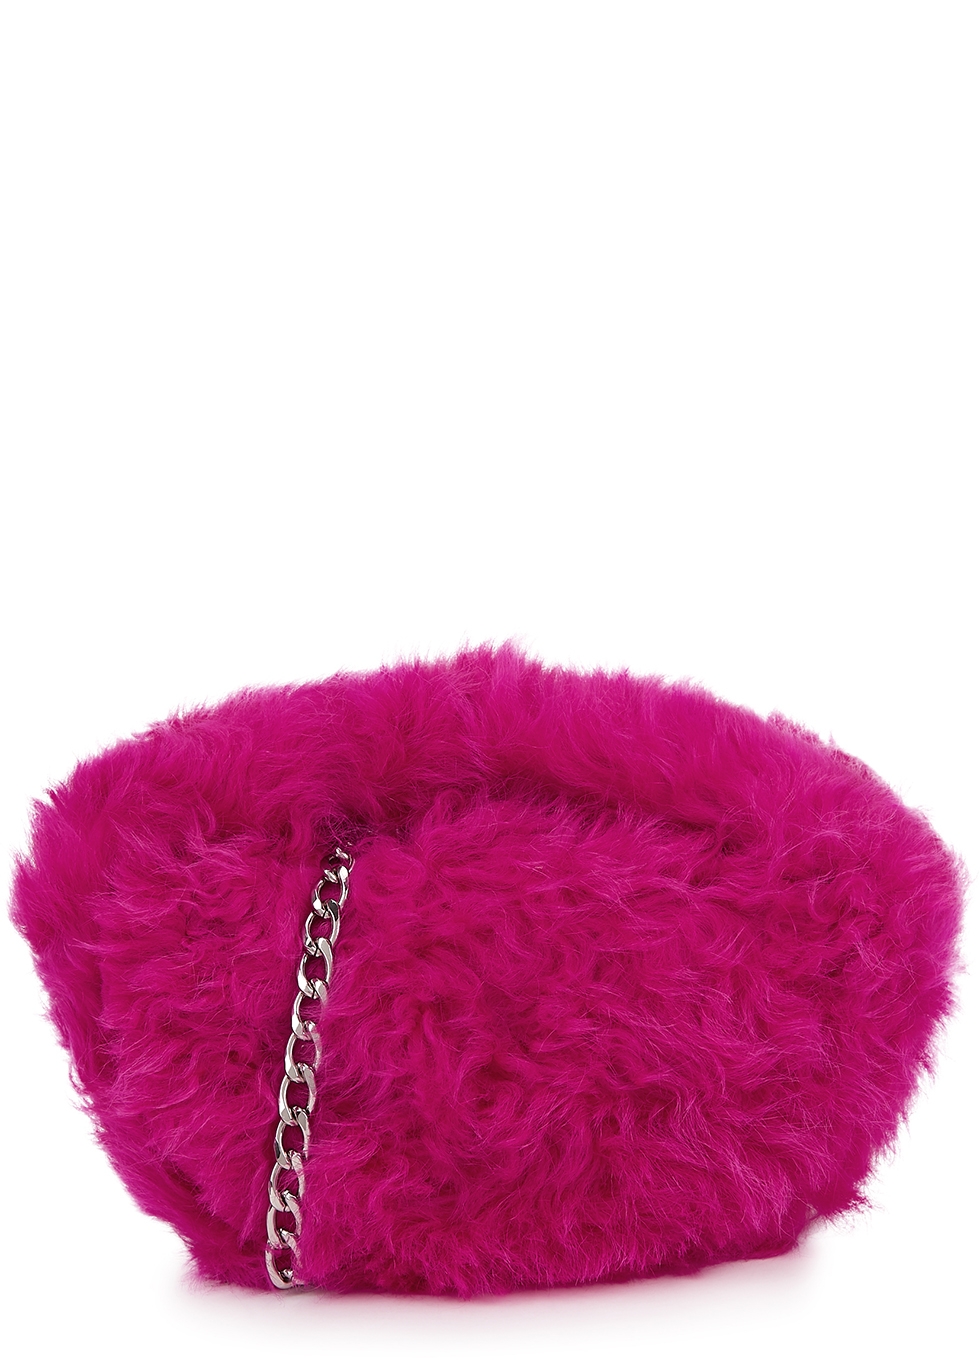 Baby Cush pink shearling top handle bag